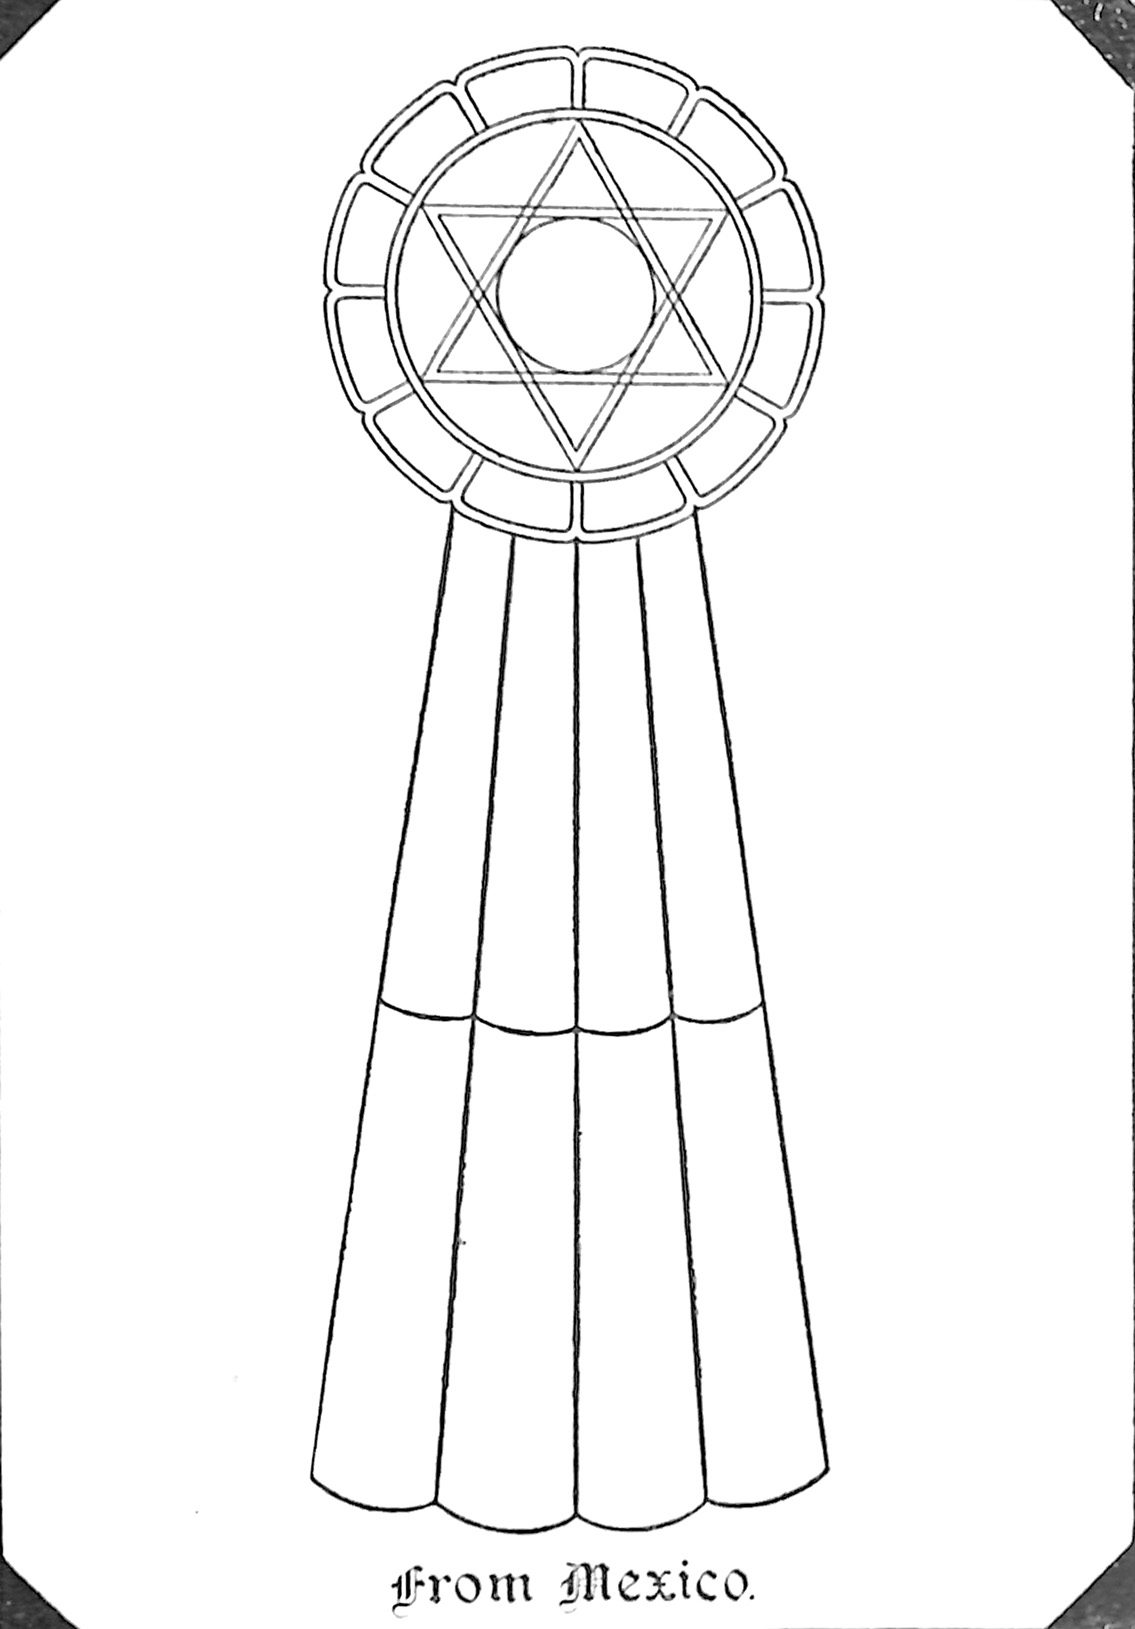 A Masonic Symbol from Mexico